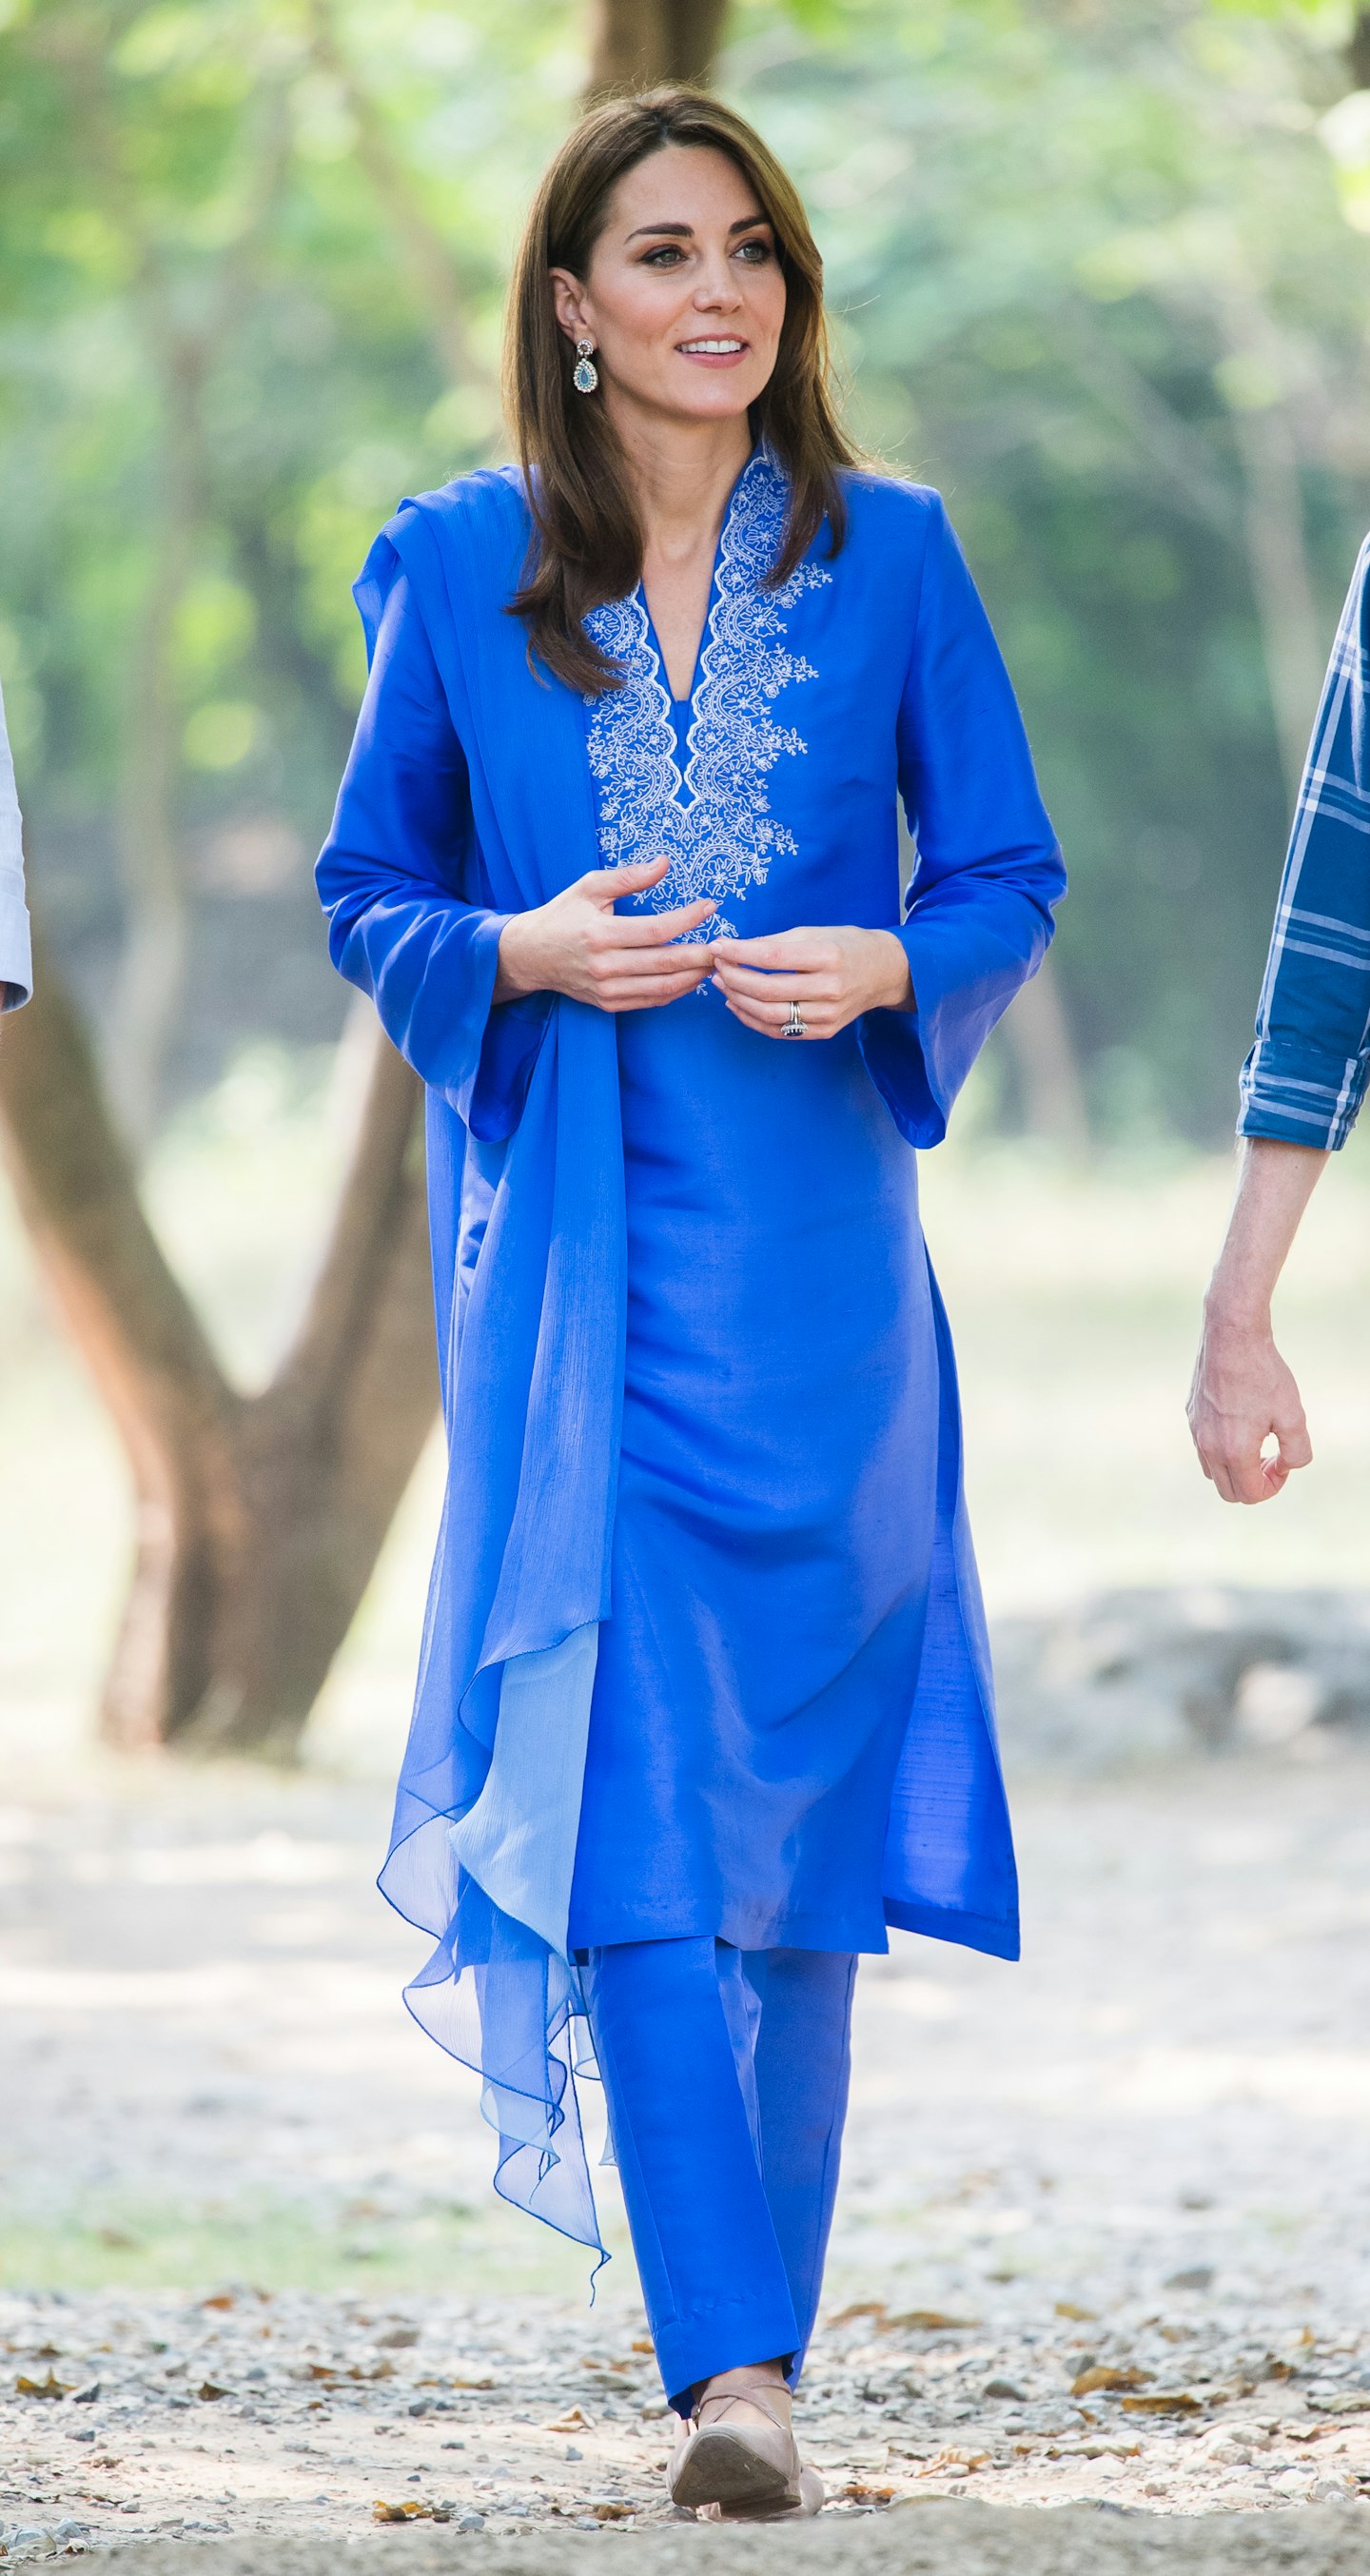 kate middleton blue outfit pakistan